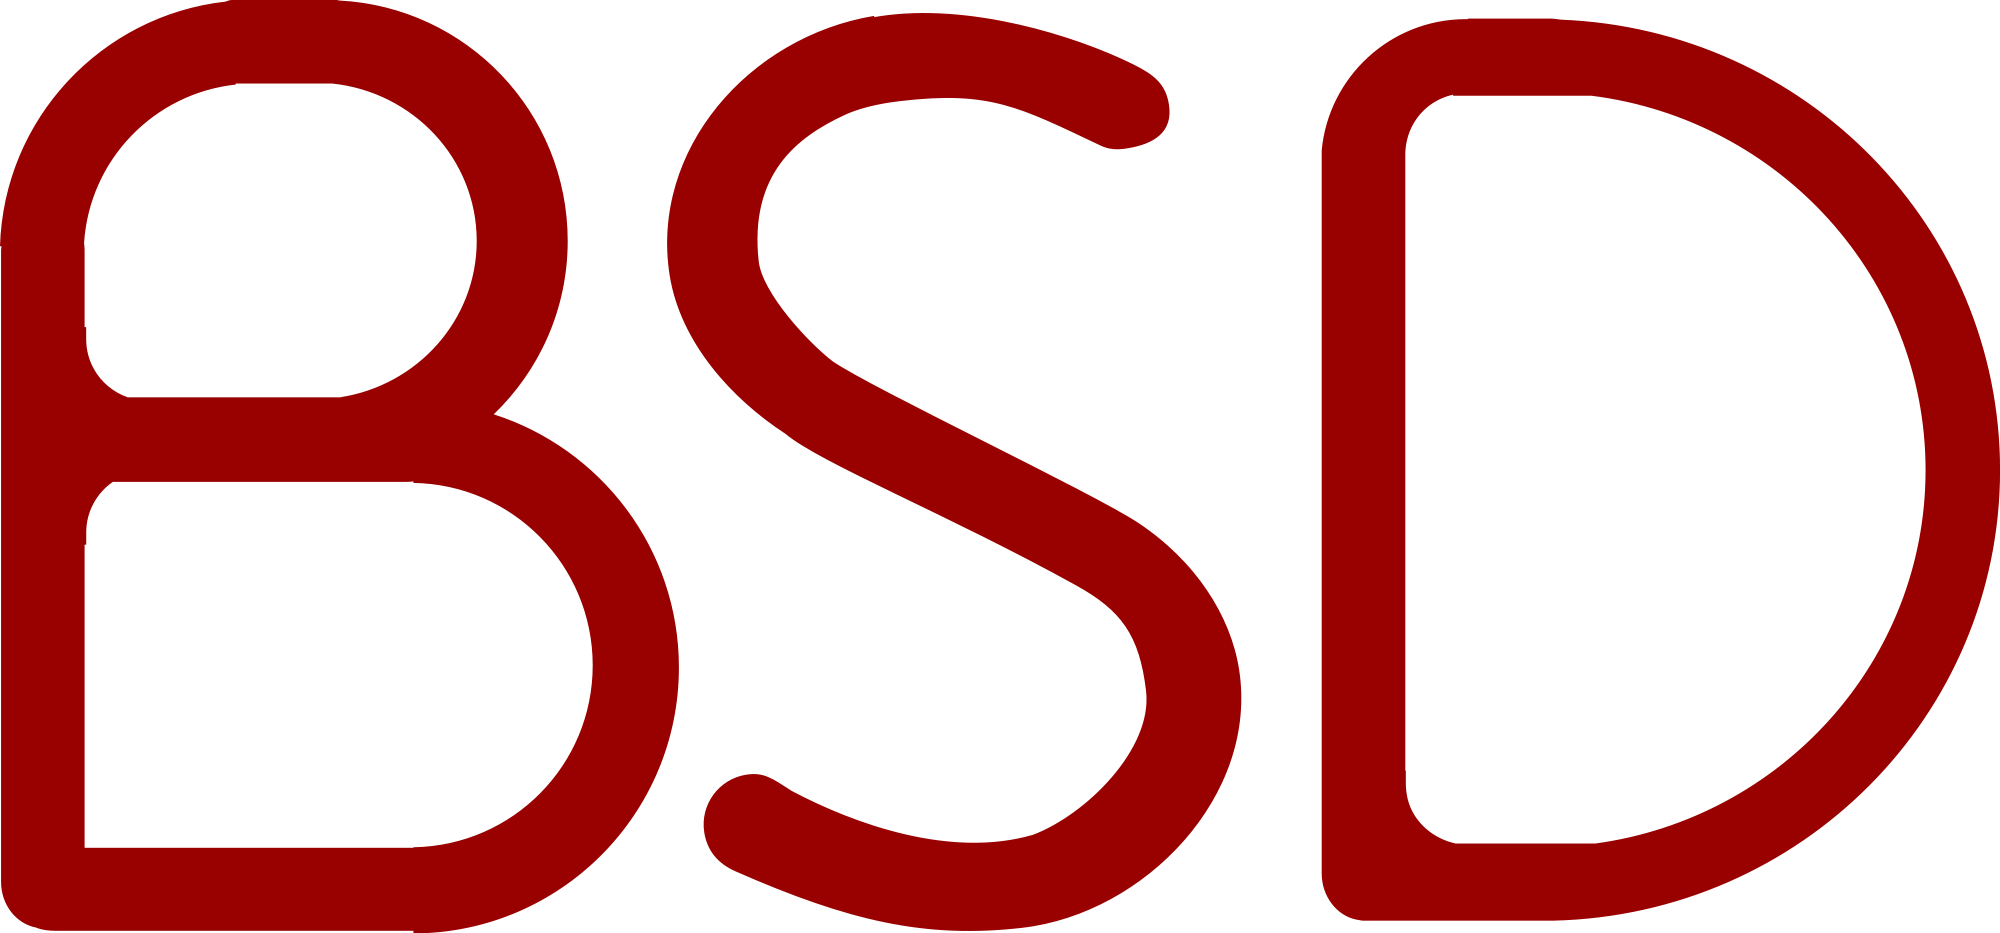 Berkeley Software Distribution (BSD)